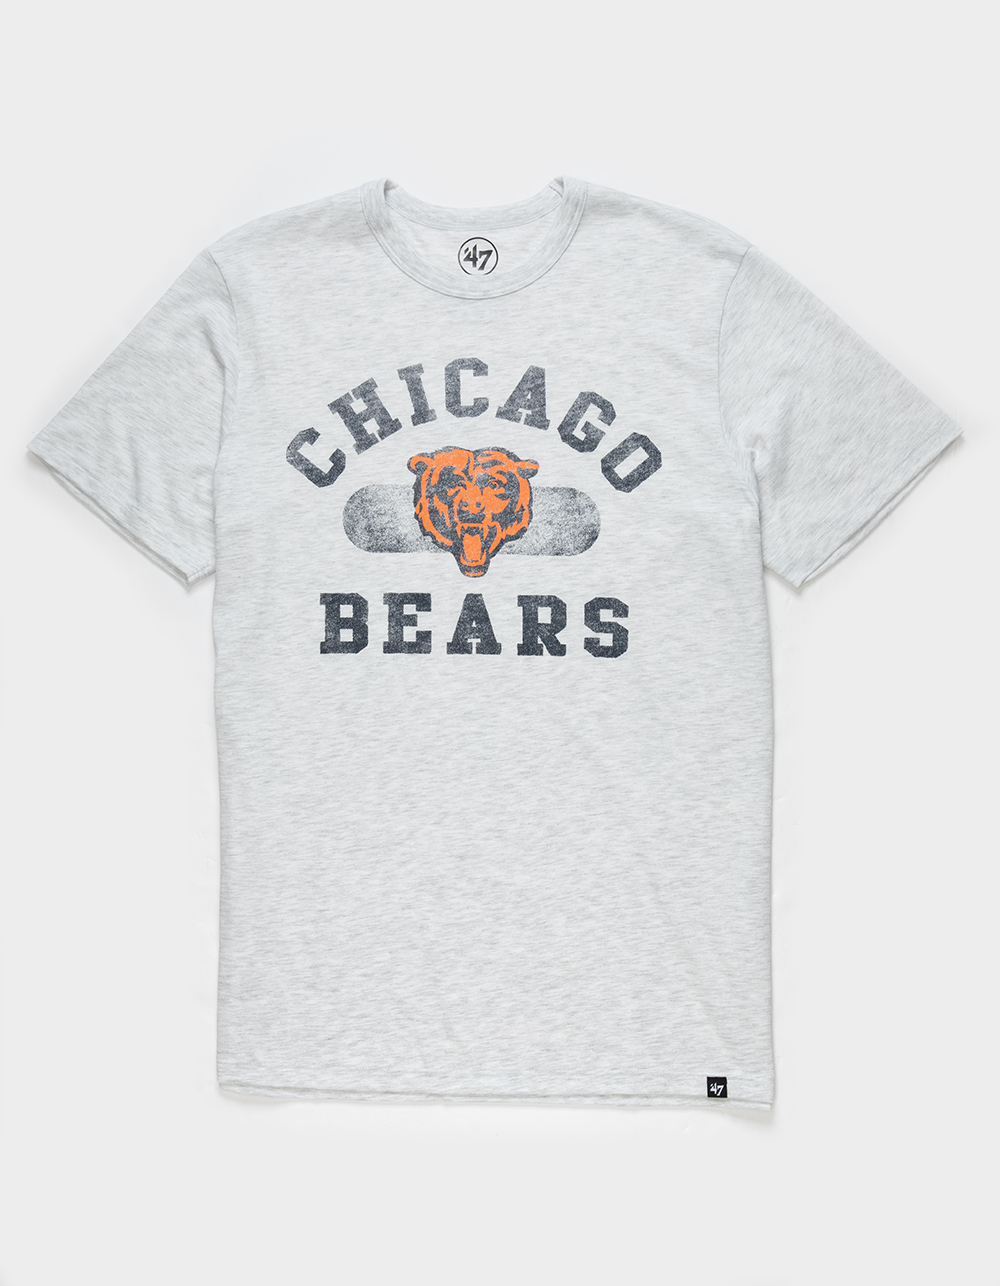 47 Brand Chicago Bears Tee - Heather Gray - X-Large